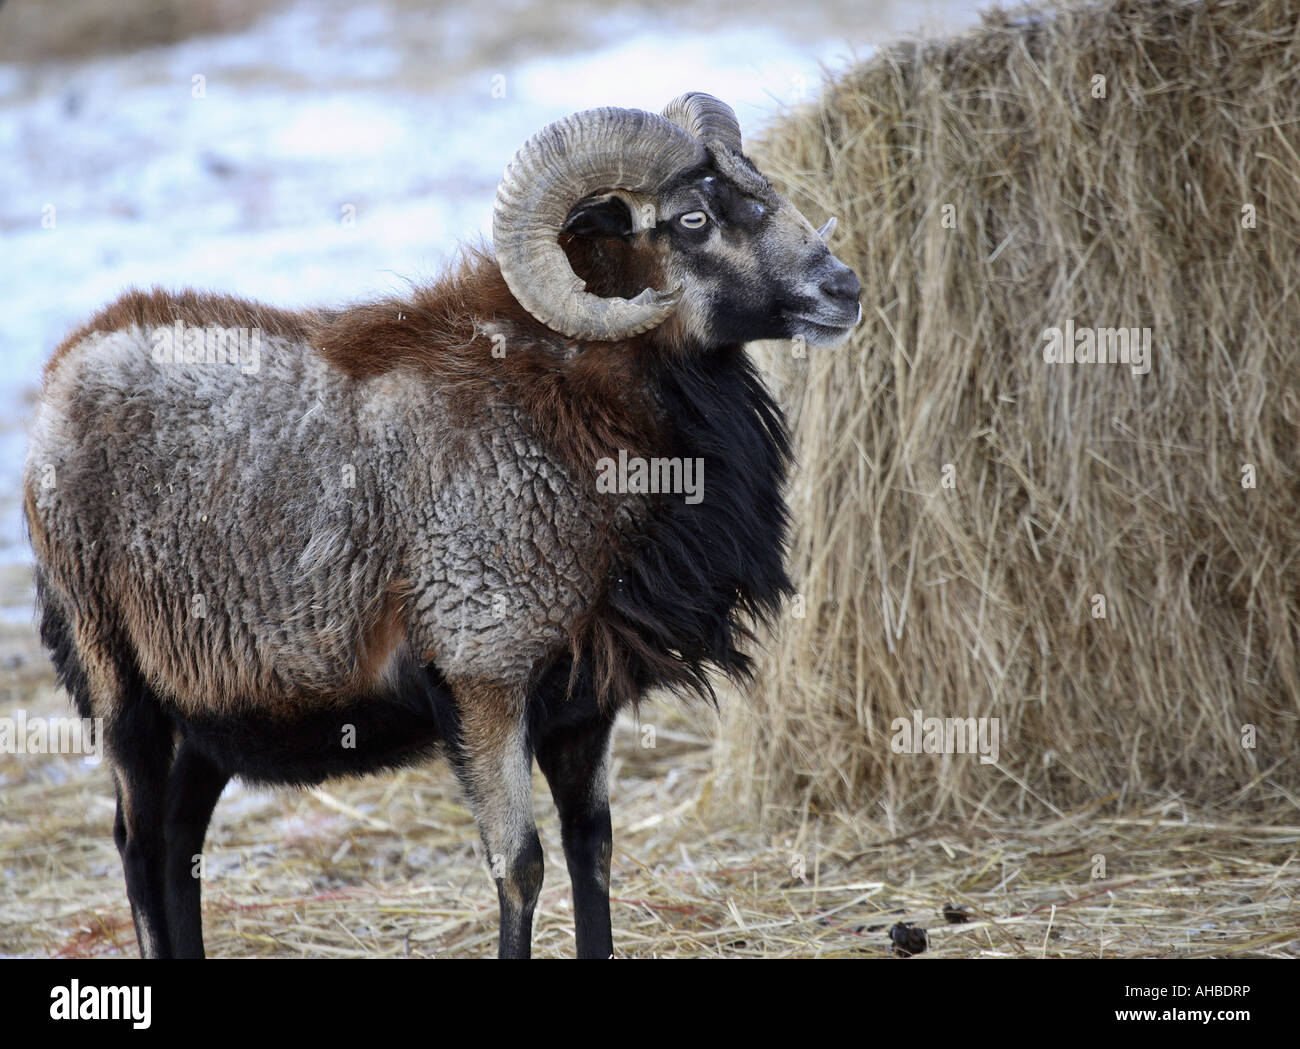 Painet jl7124 urial ovis virgnei arkaf mediumsized wild sheep known shapo arkhar noticeable features reddishbrown long fur Stock Photo